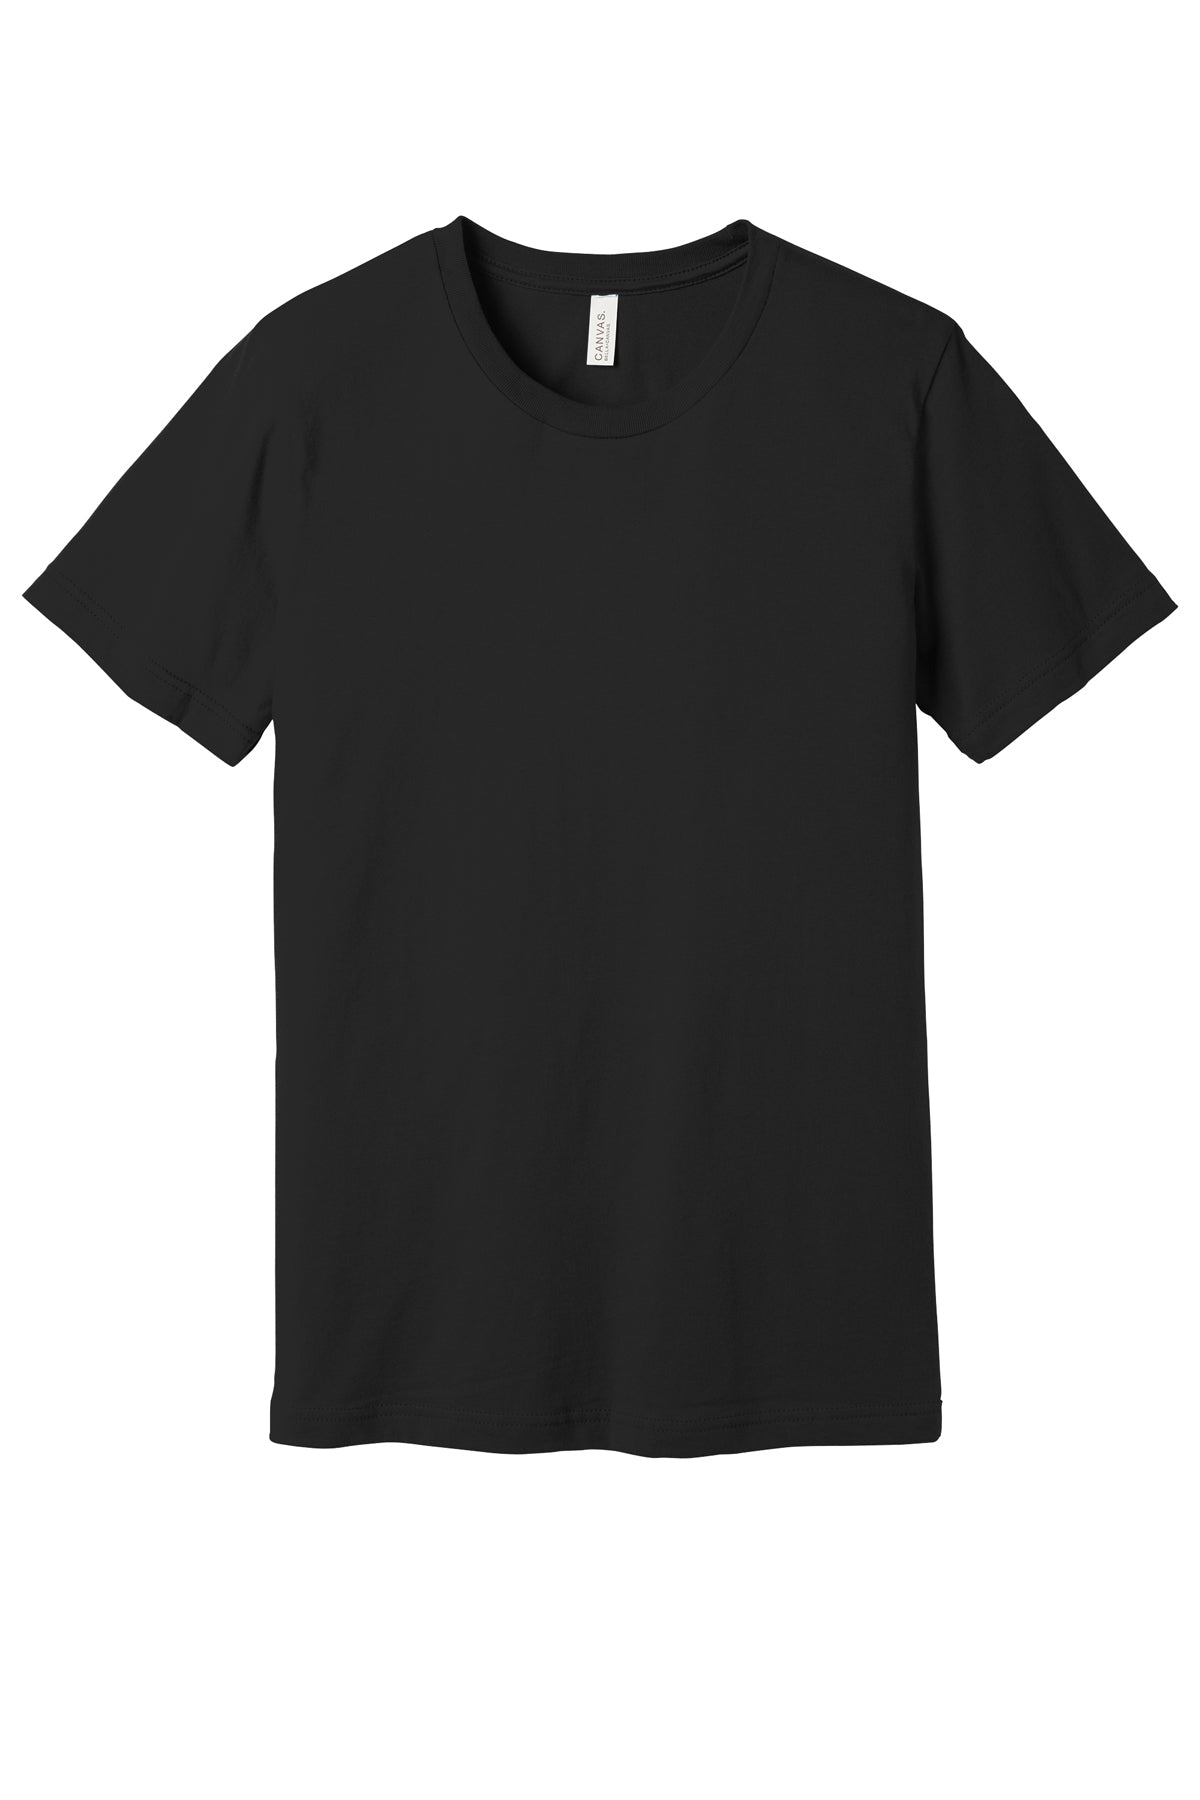 Bella Canvas Mens/Unisex Cotton Short Sleeve Shirts Black